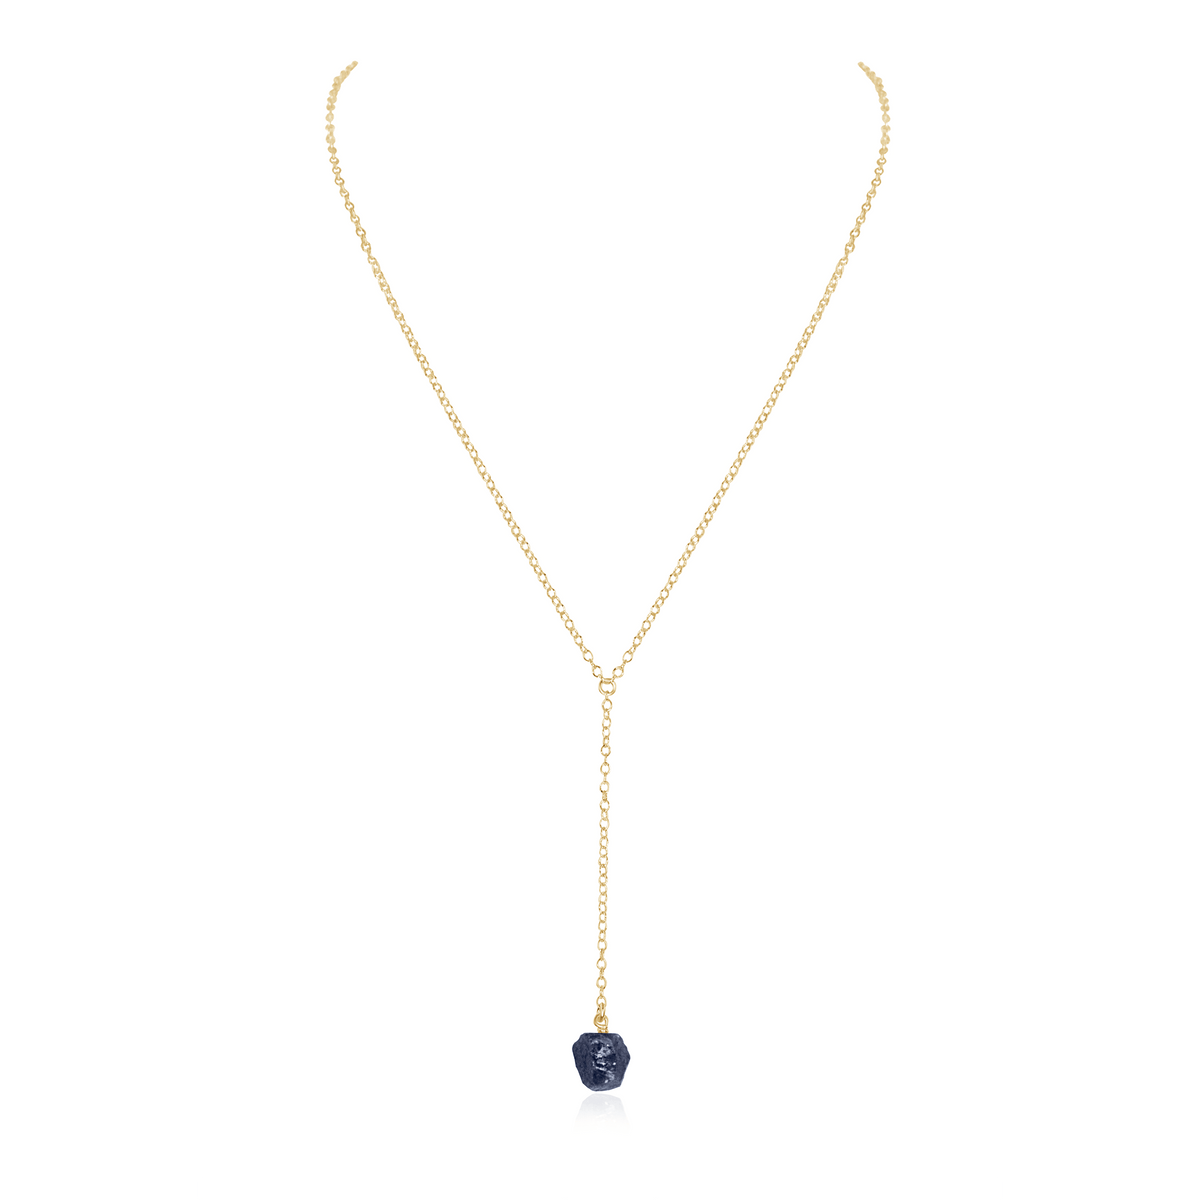 Raw Sapphire Crystal Lariat Necklace - Raw Sapphire Crystal Lariat Necklace - 14k Gold Fill - Luna Tide Handmade Crystal Jewellery